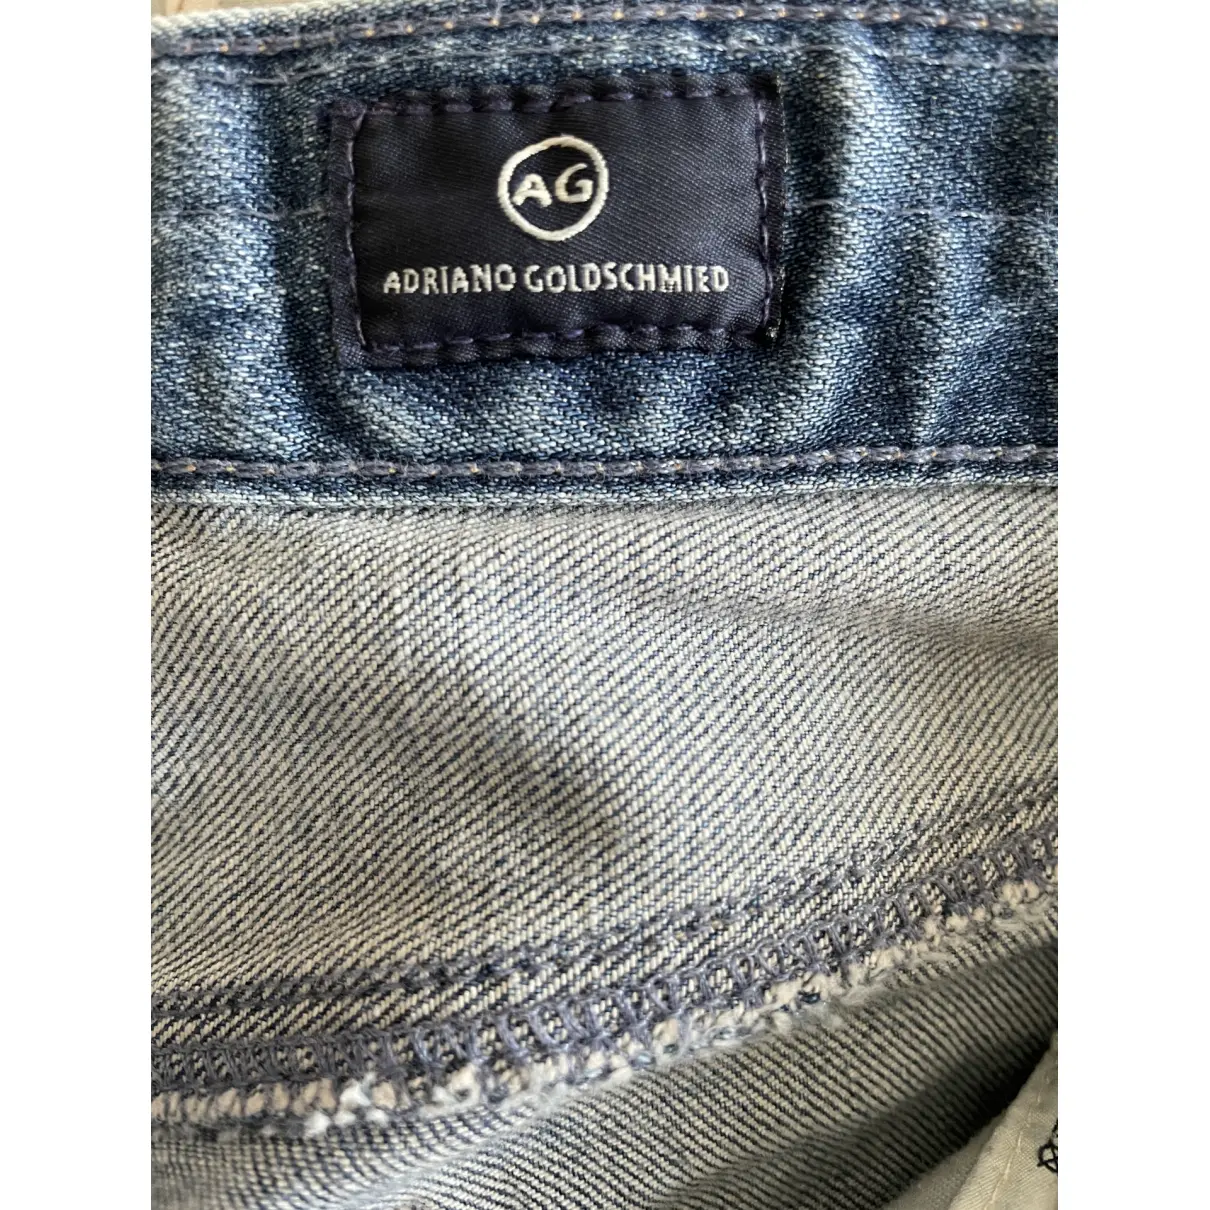 Buy Adriano Goldschmied Slim jeans online